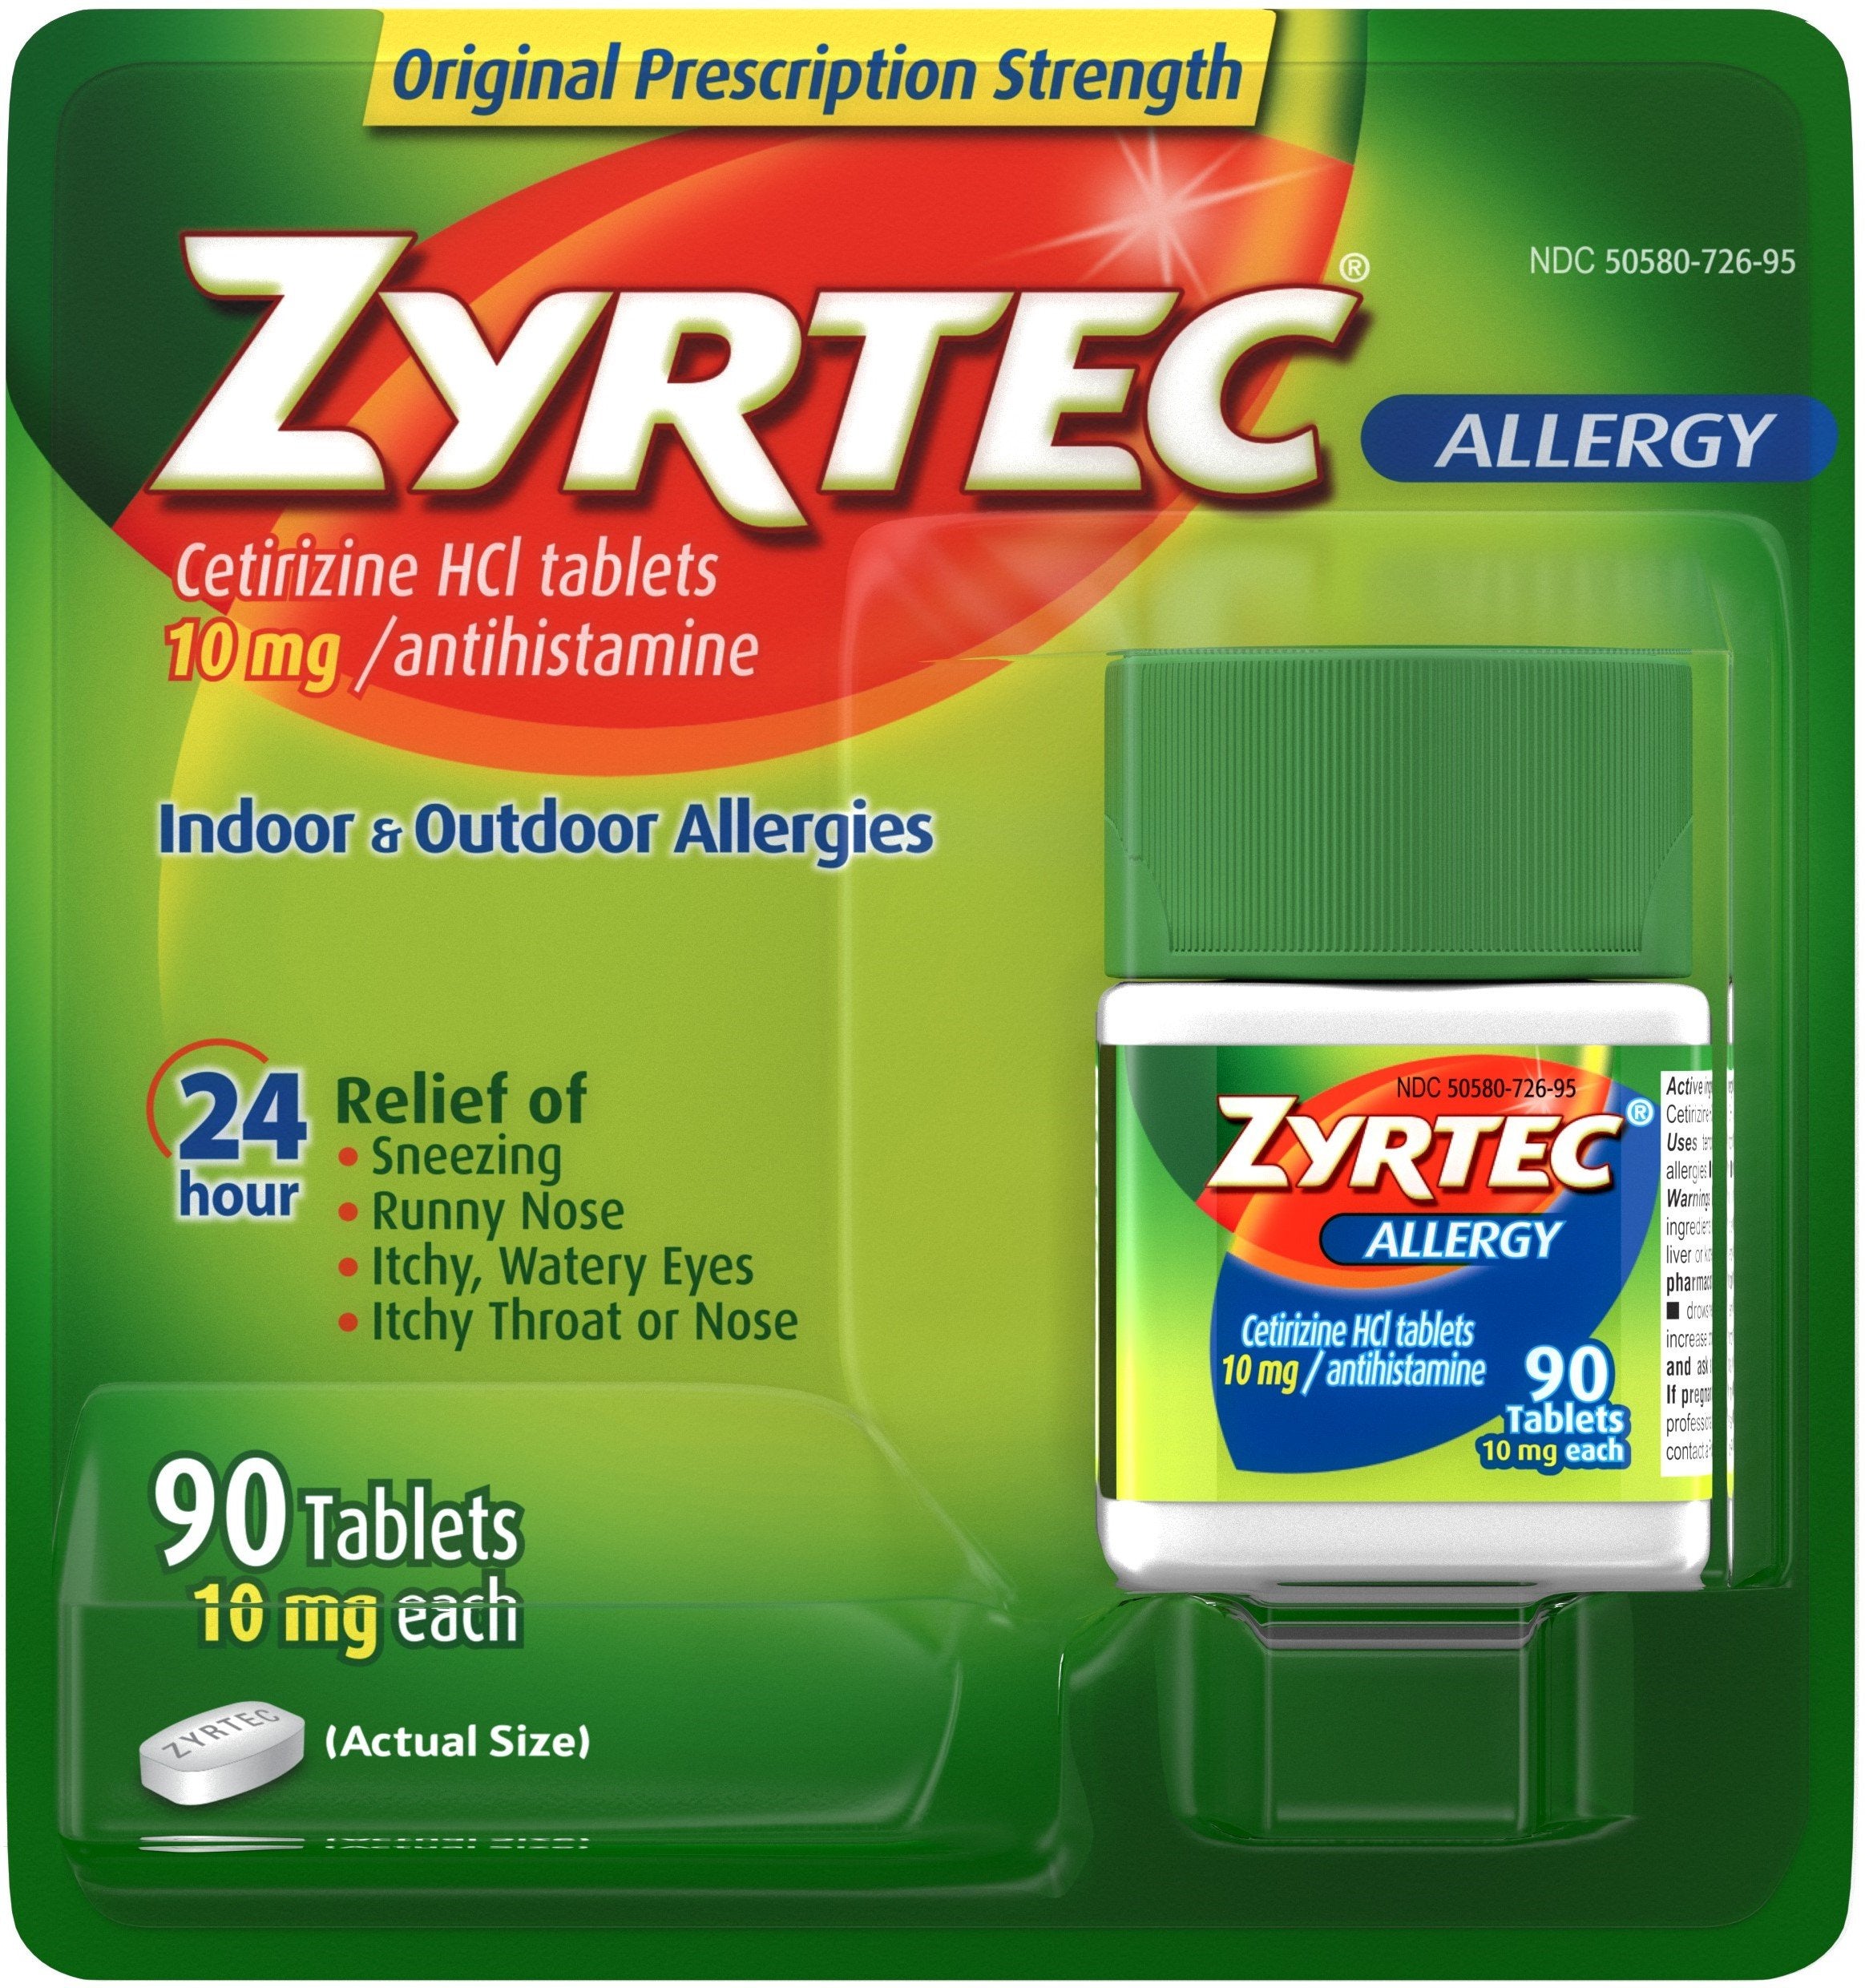 Zyrtec Allergy Antihistamine 24 Hour Relief 10mg Tablets - 90ct/24pk